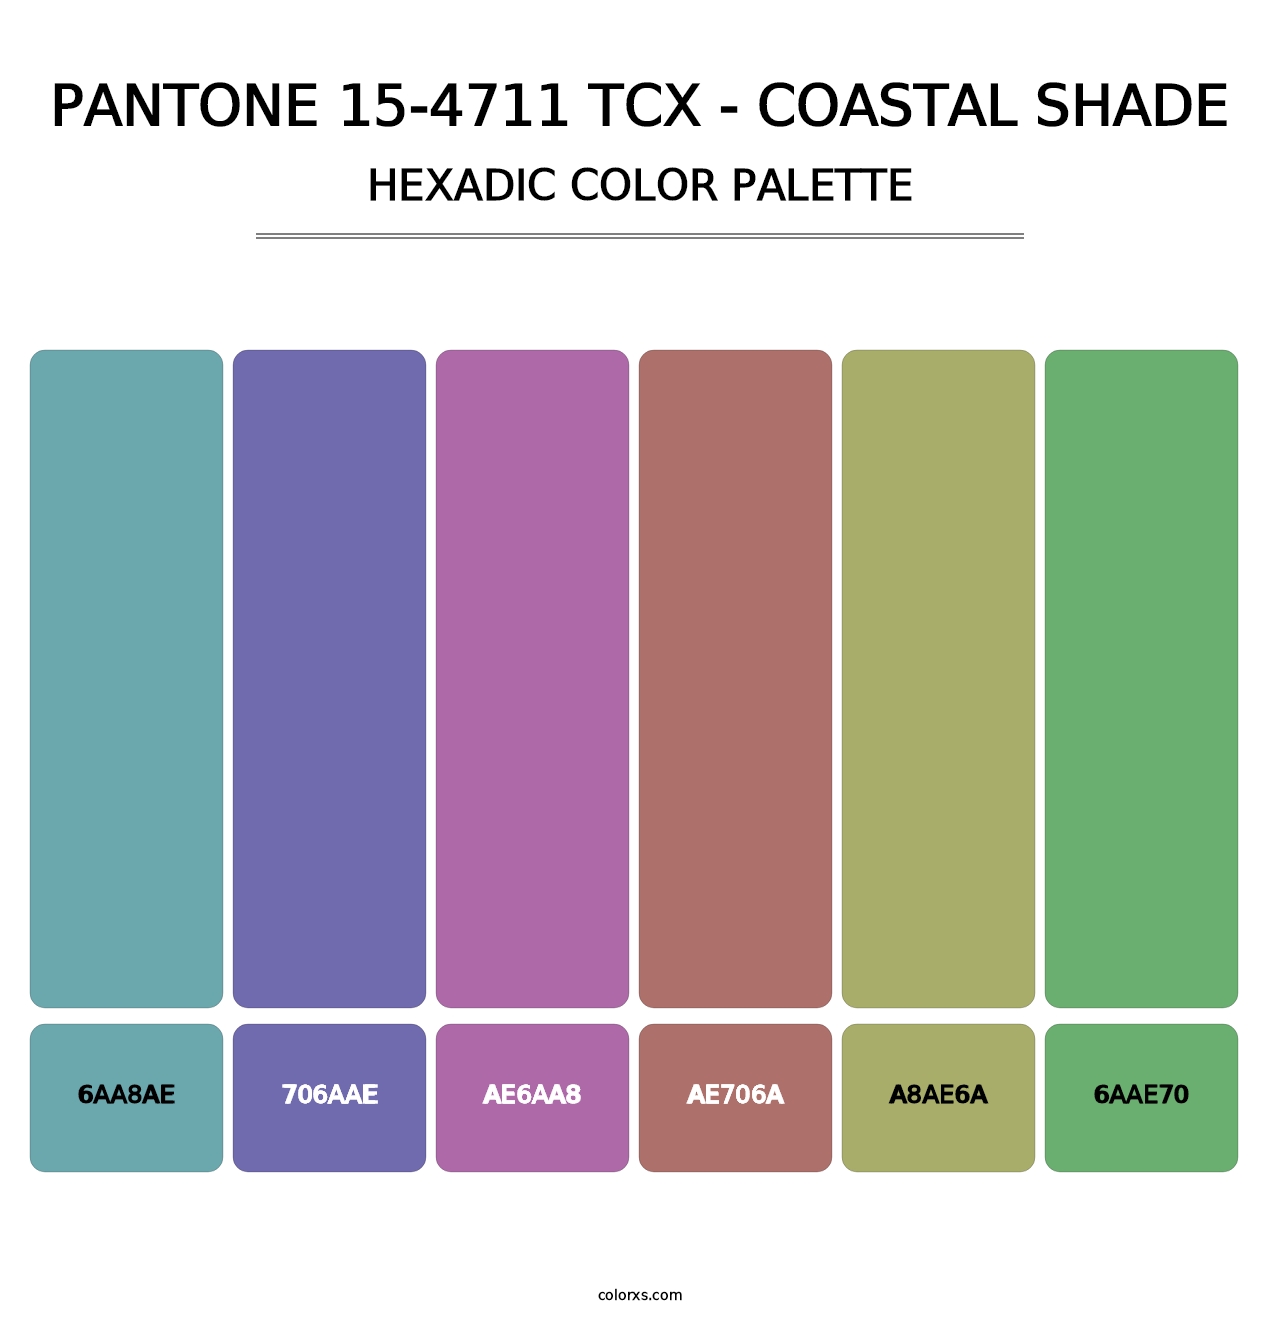 PANTONE 15-4711 TCX - Coastal Shade - Hexadic Color Palette